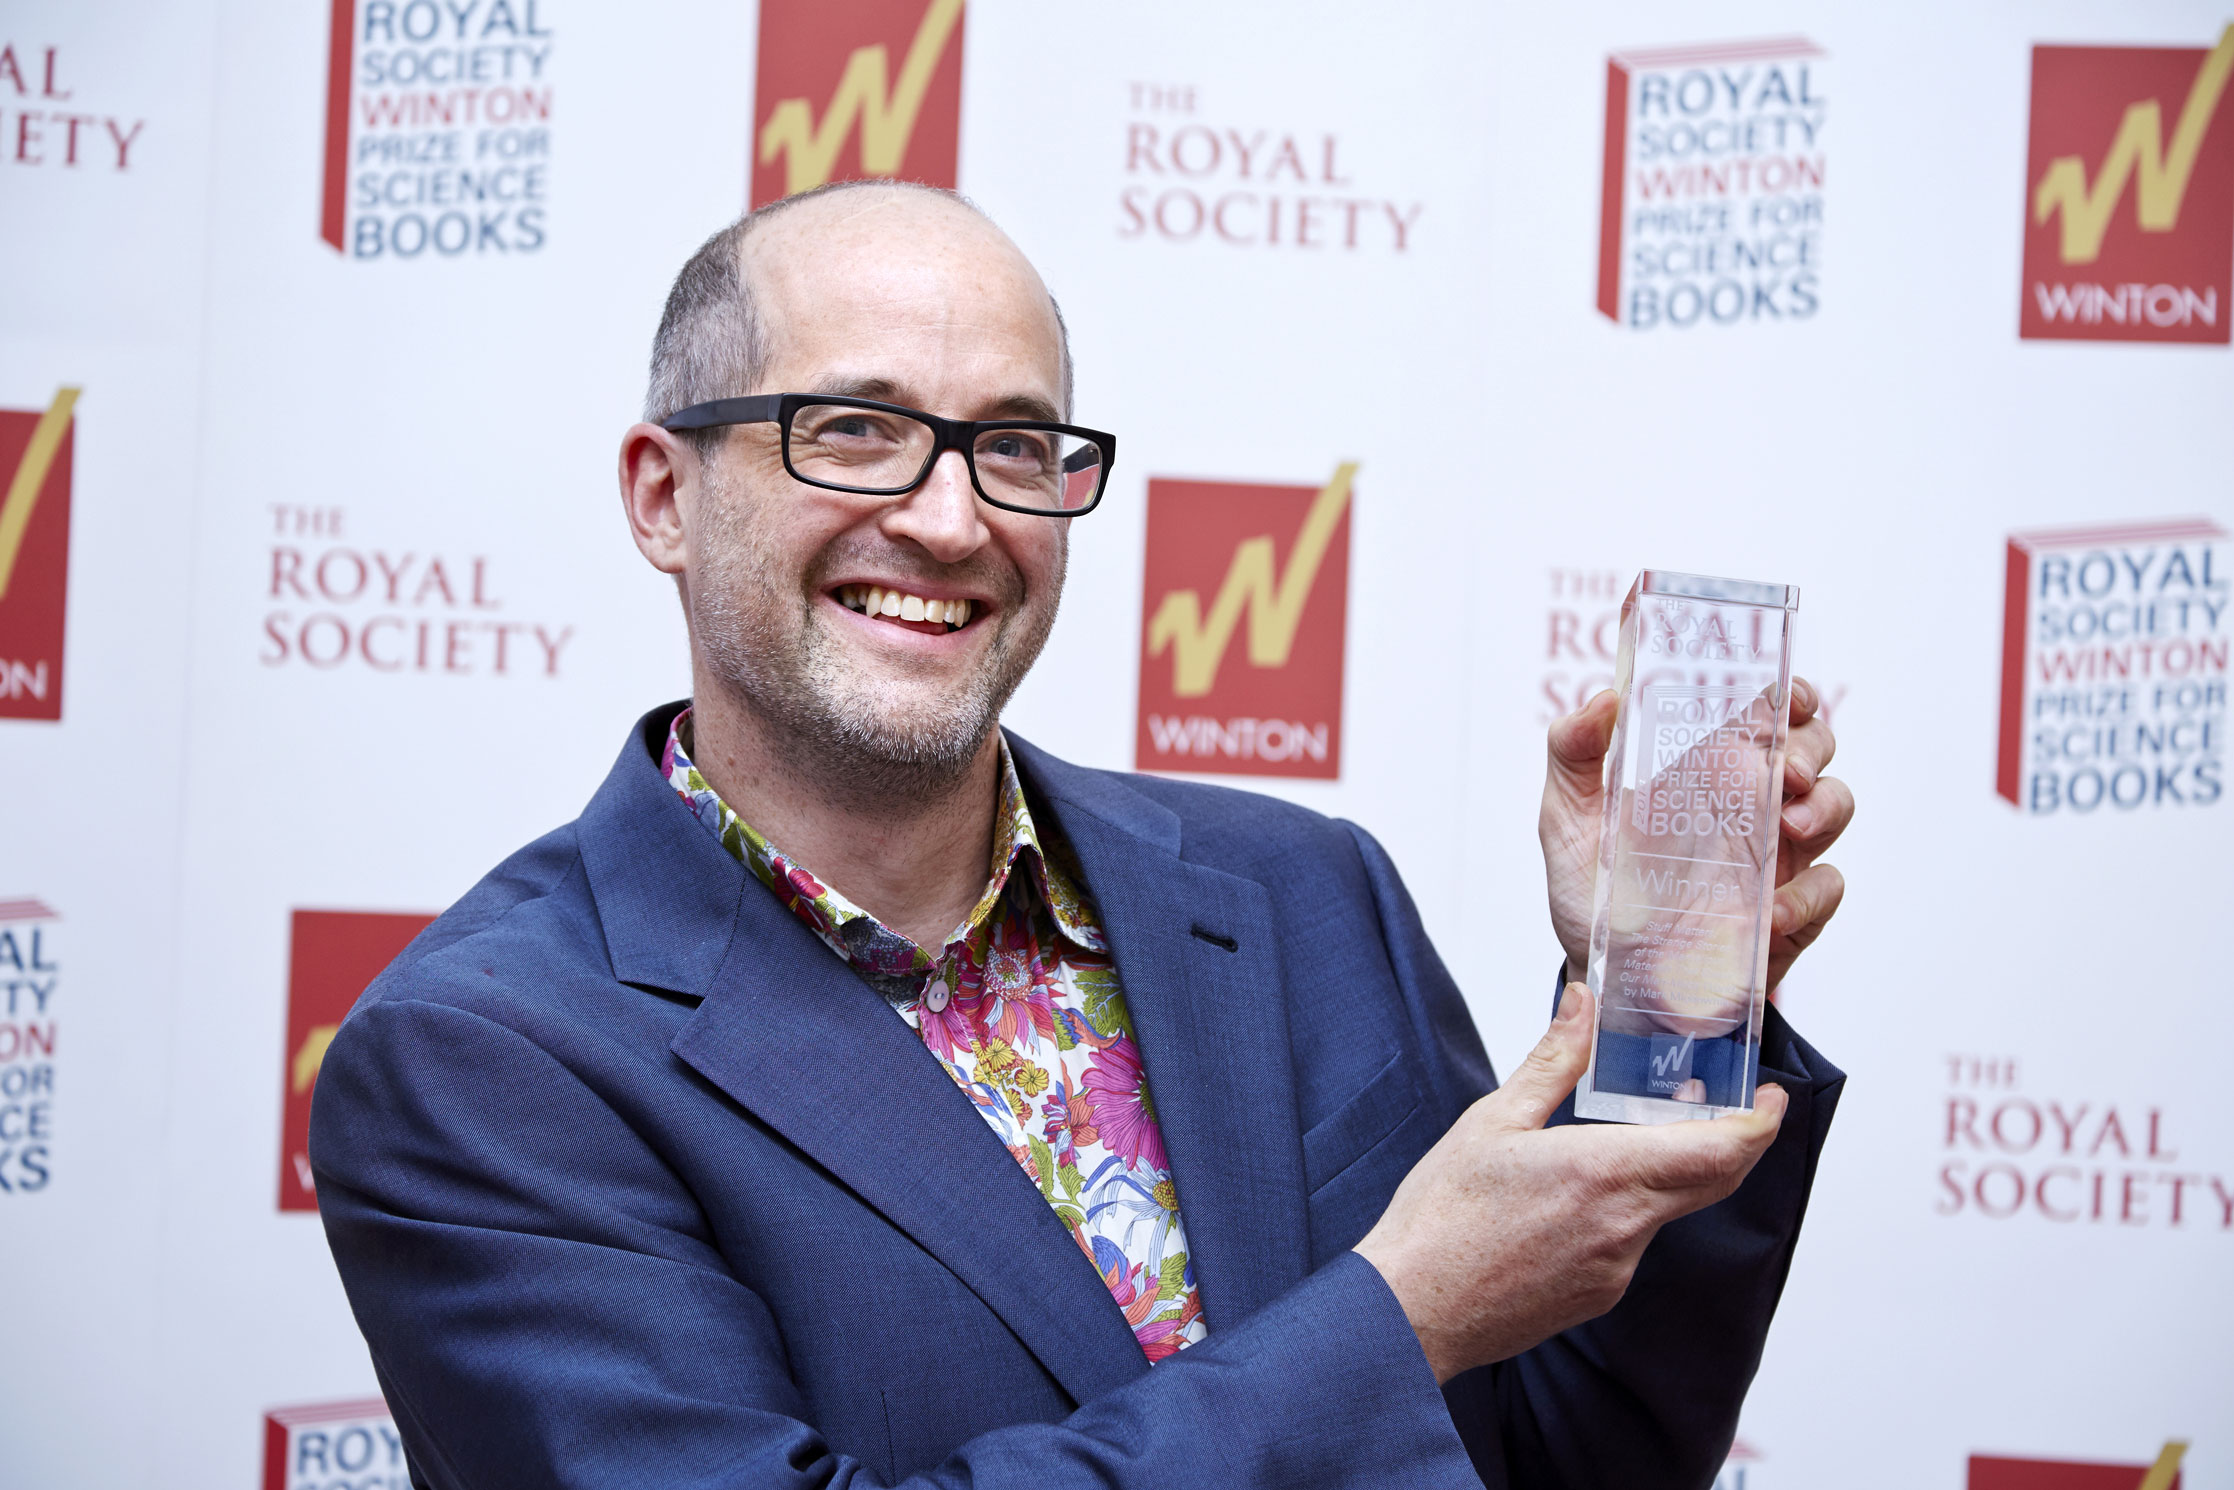 Professor Mark Miodownik winner of the 2014 Royal Society Winton Prize for Science Books. Credit: Royal Society